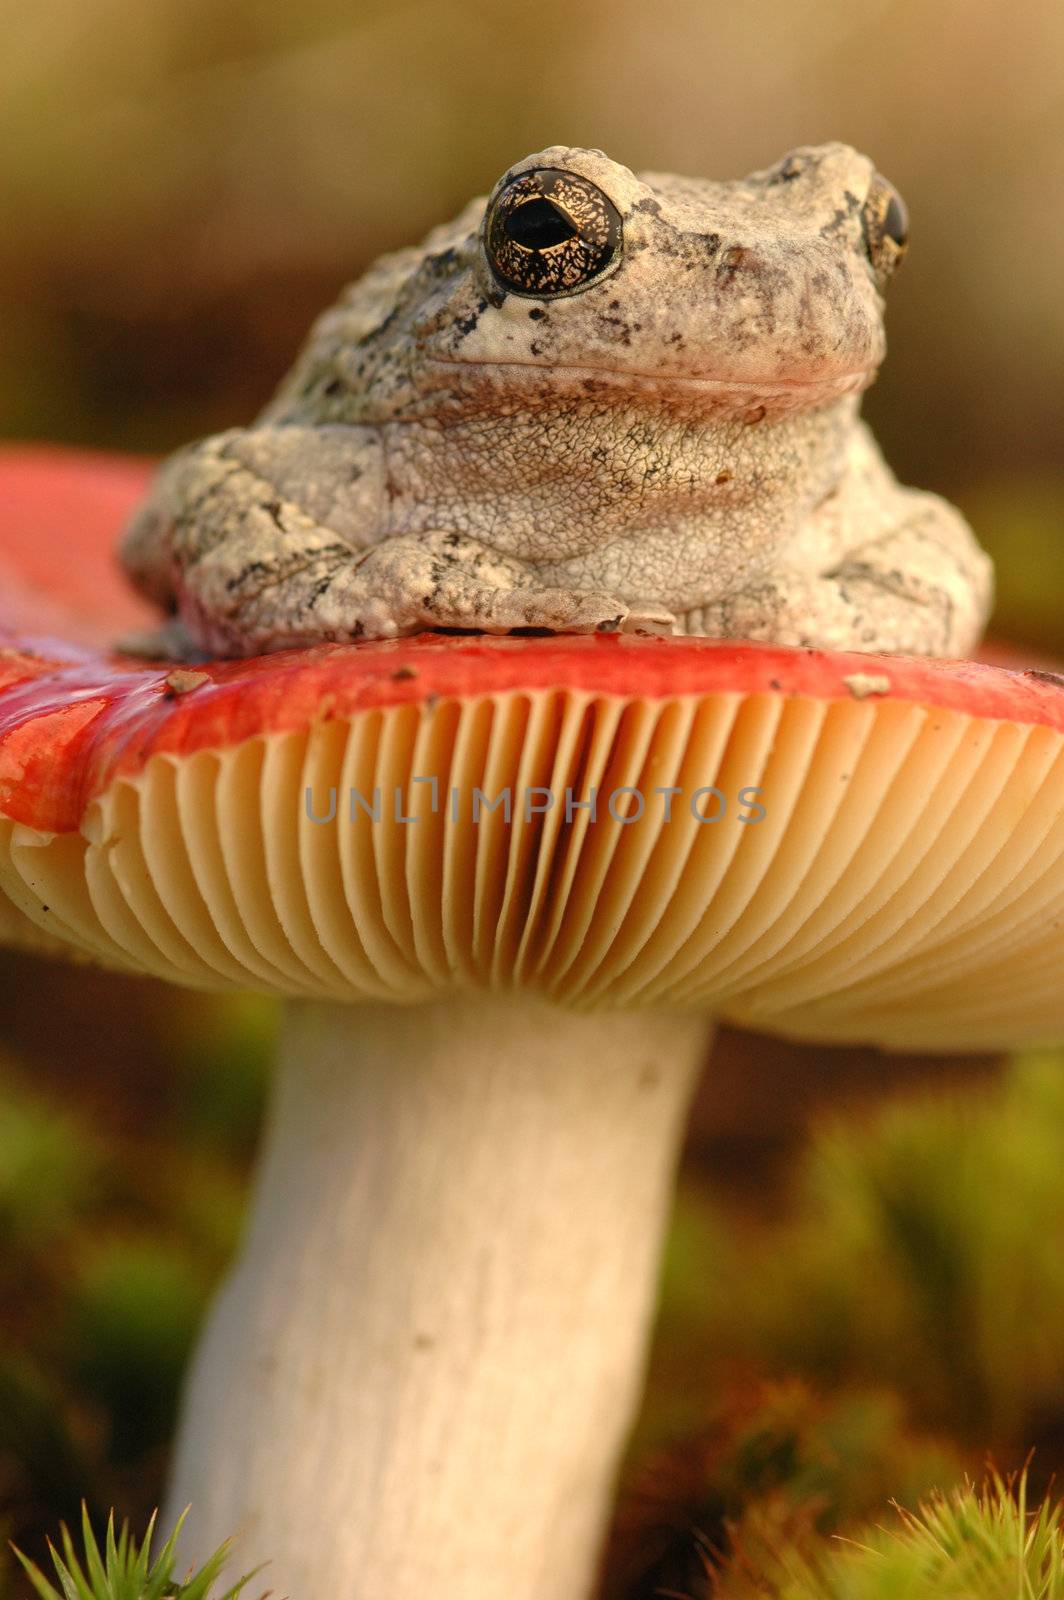 Grey tree frog (Hyla versicolor) on mushroom